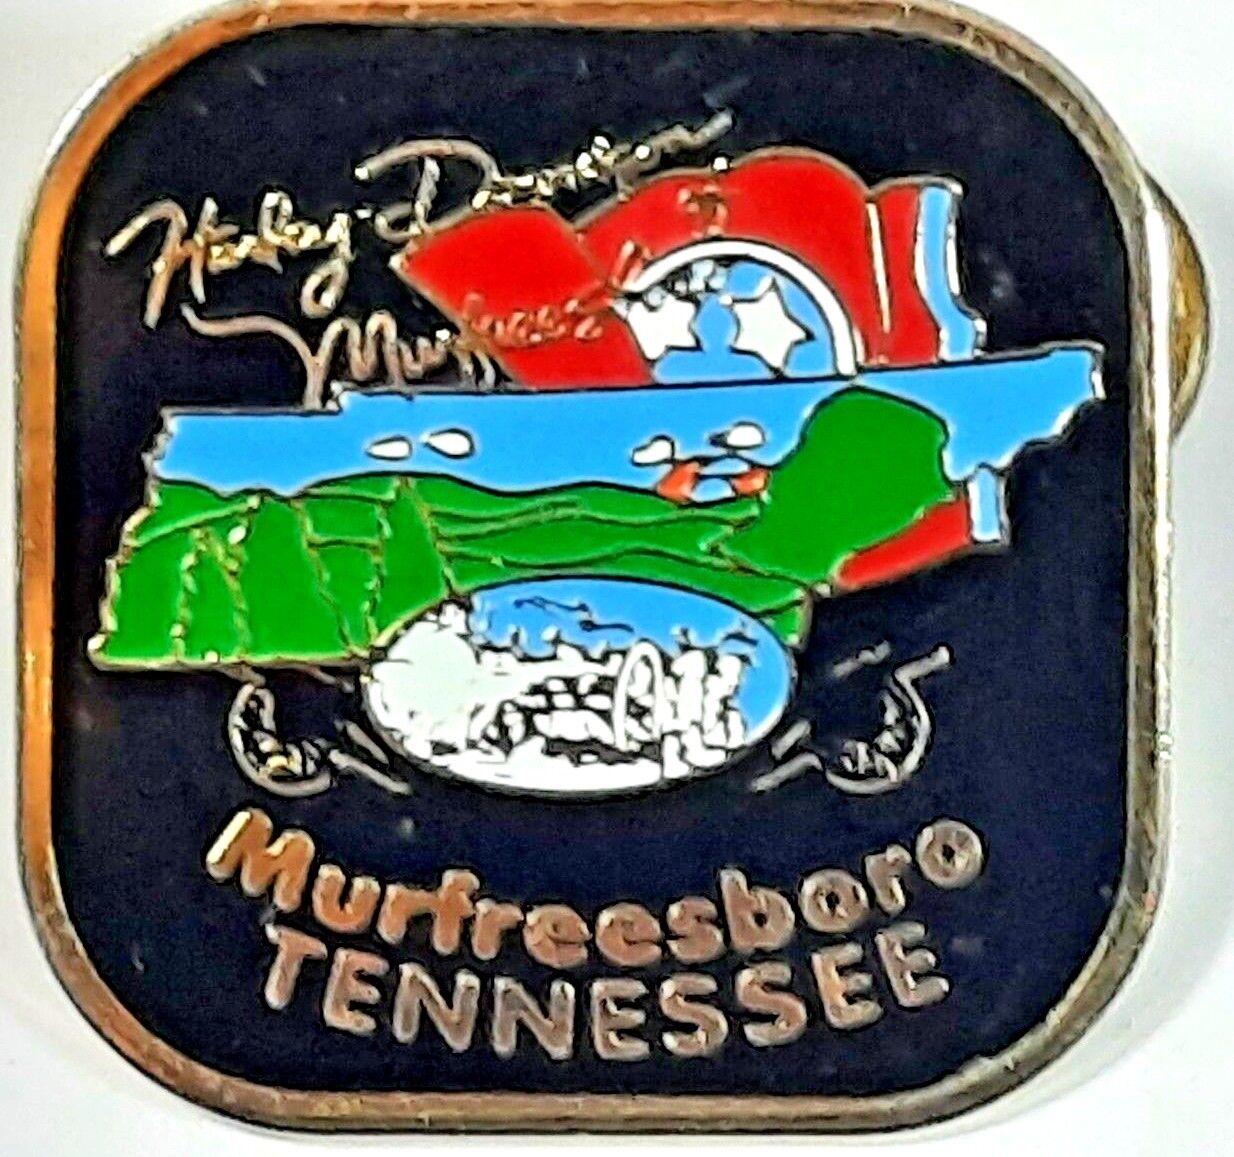 Harley Davidson Motorcycles Murfreesboro, Tennessee TN pinback pin metal pre-own